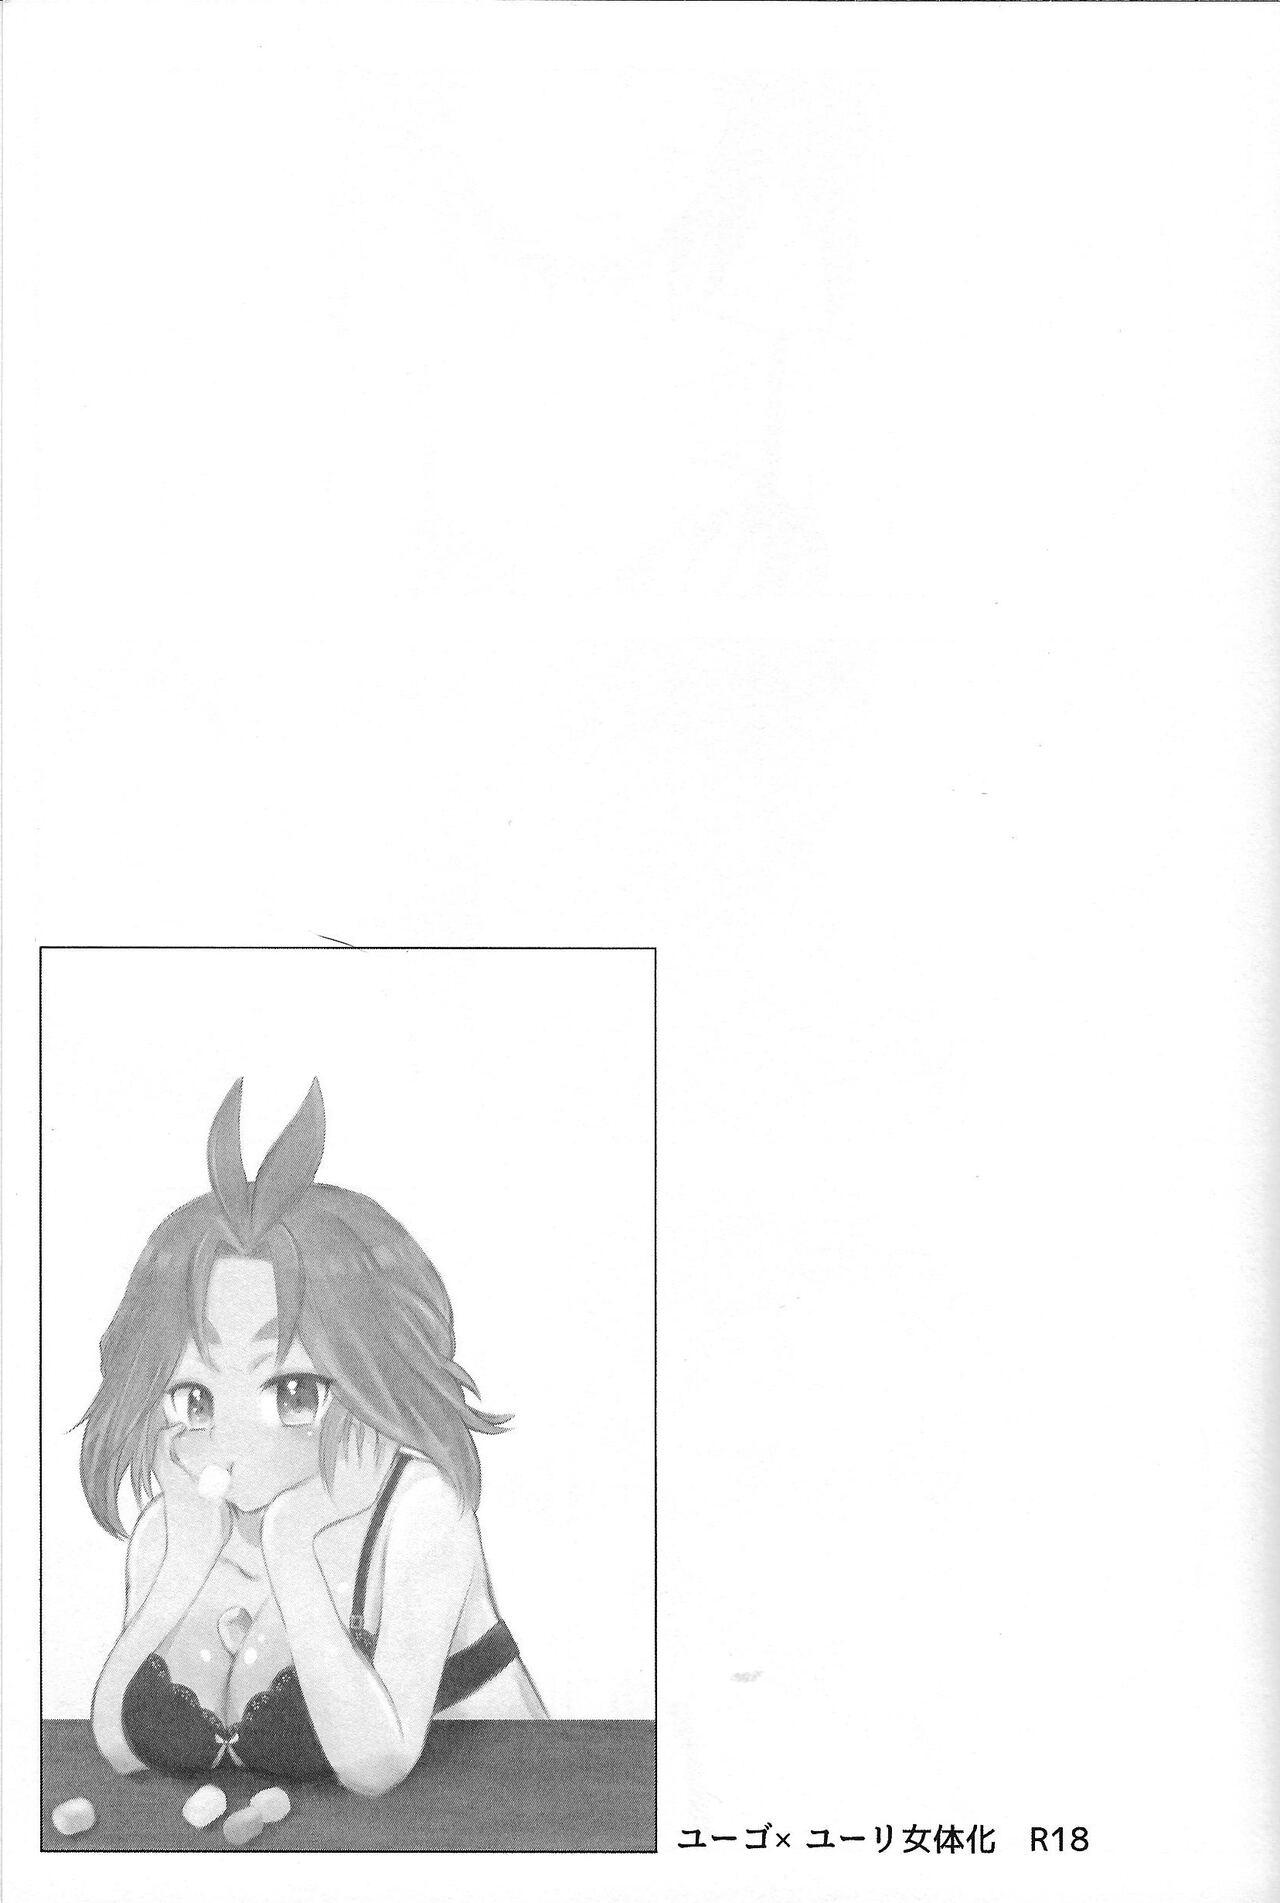 Sub Sakura Masyumaro - Yu-gi-oh arc-v Chacal - Page 2